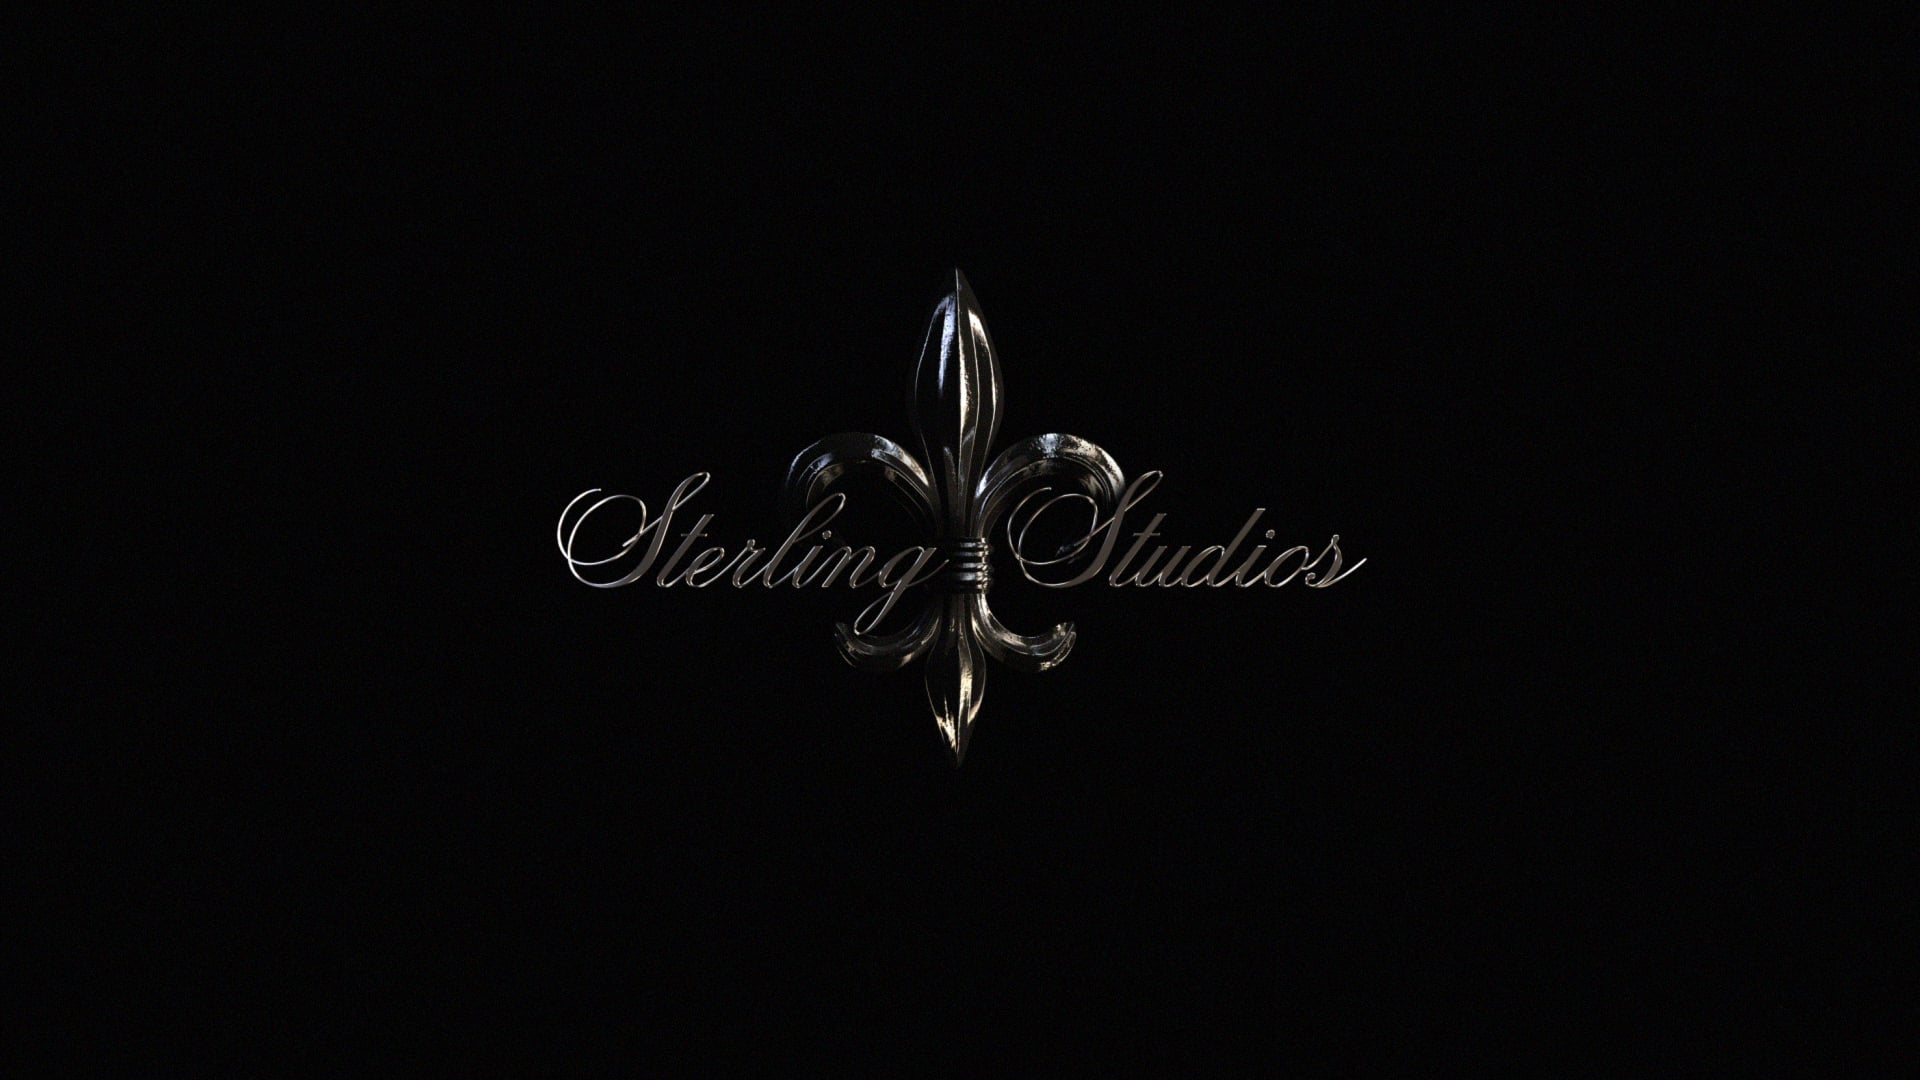 Sterling Studios